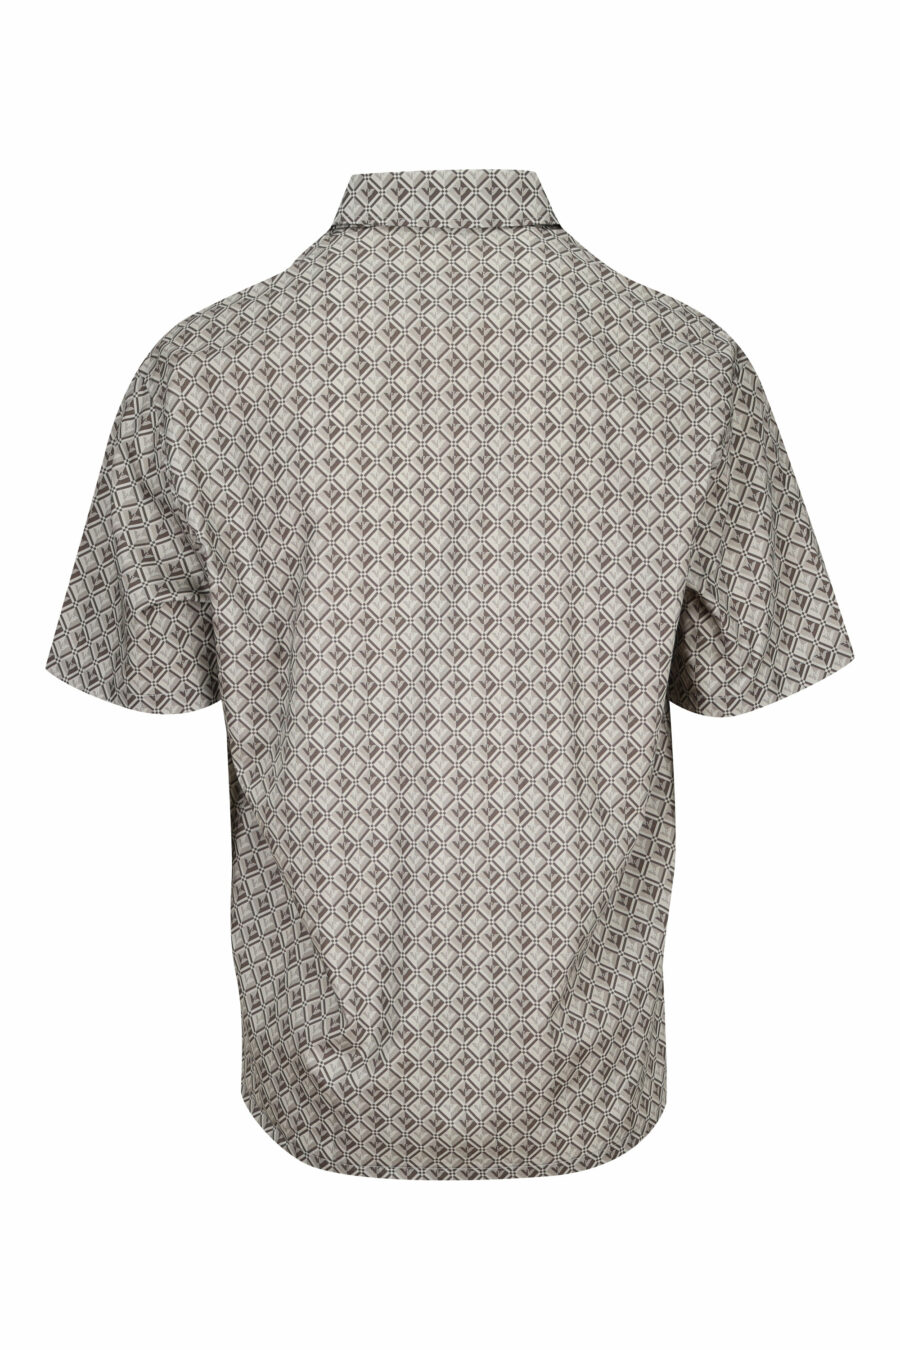 Short sleeve grey diamond shirt with mini-logo - 8057970851387 1